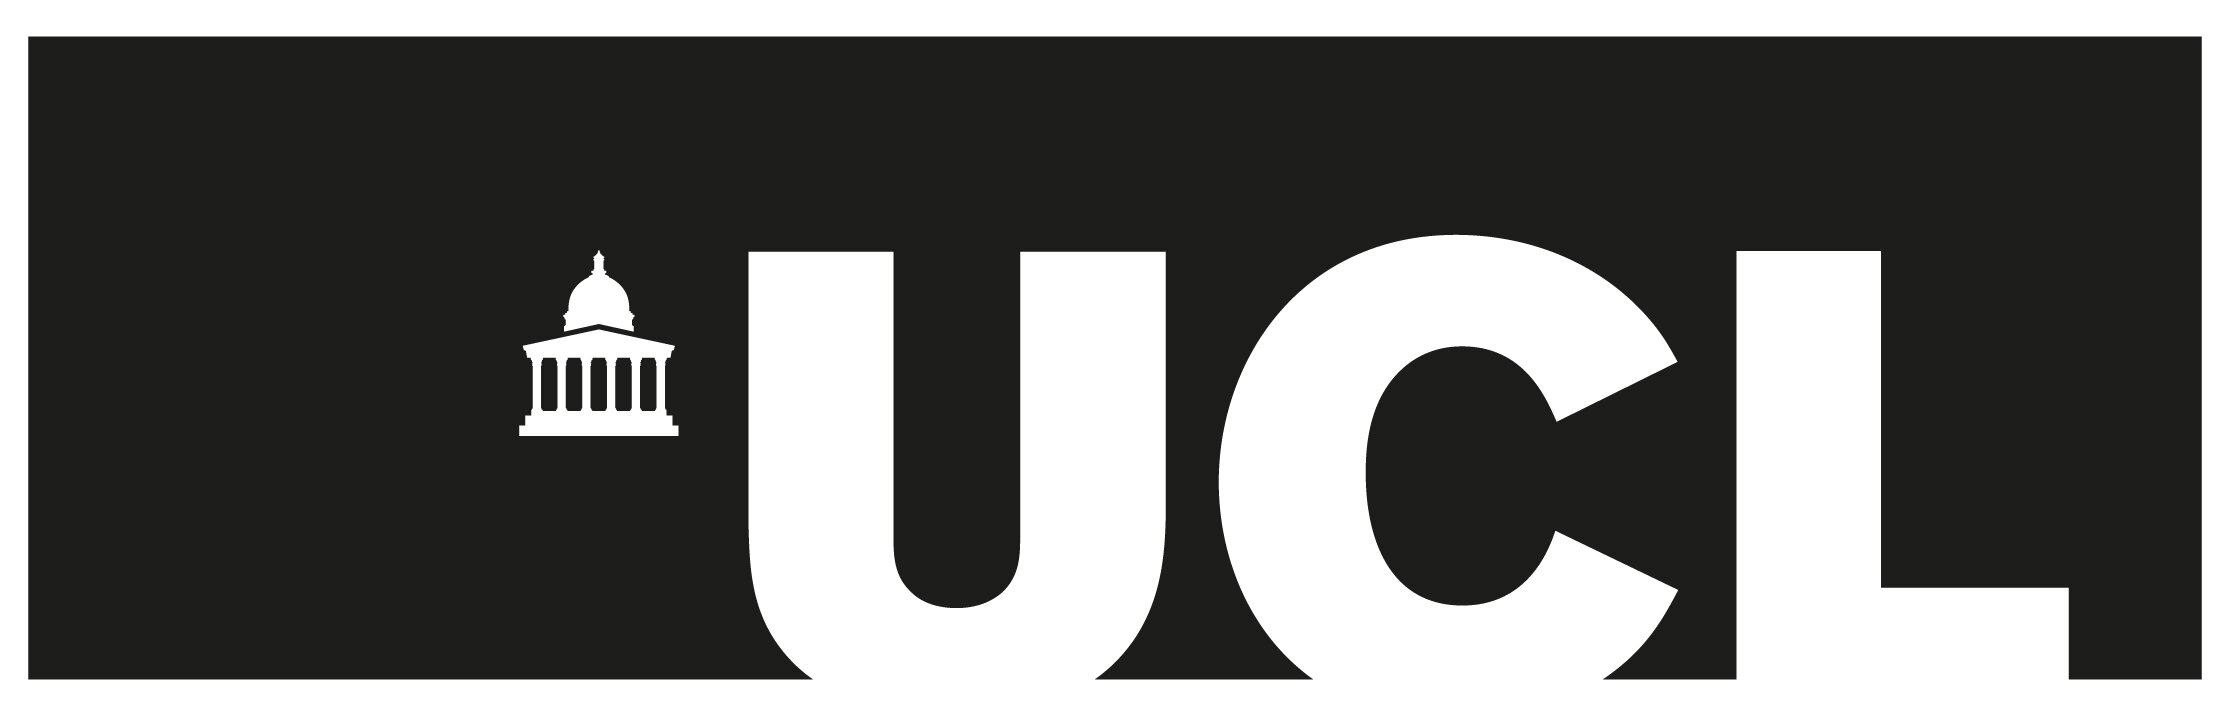 ULC_logo.jpg